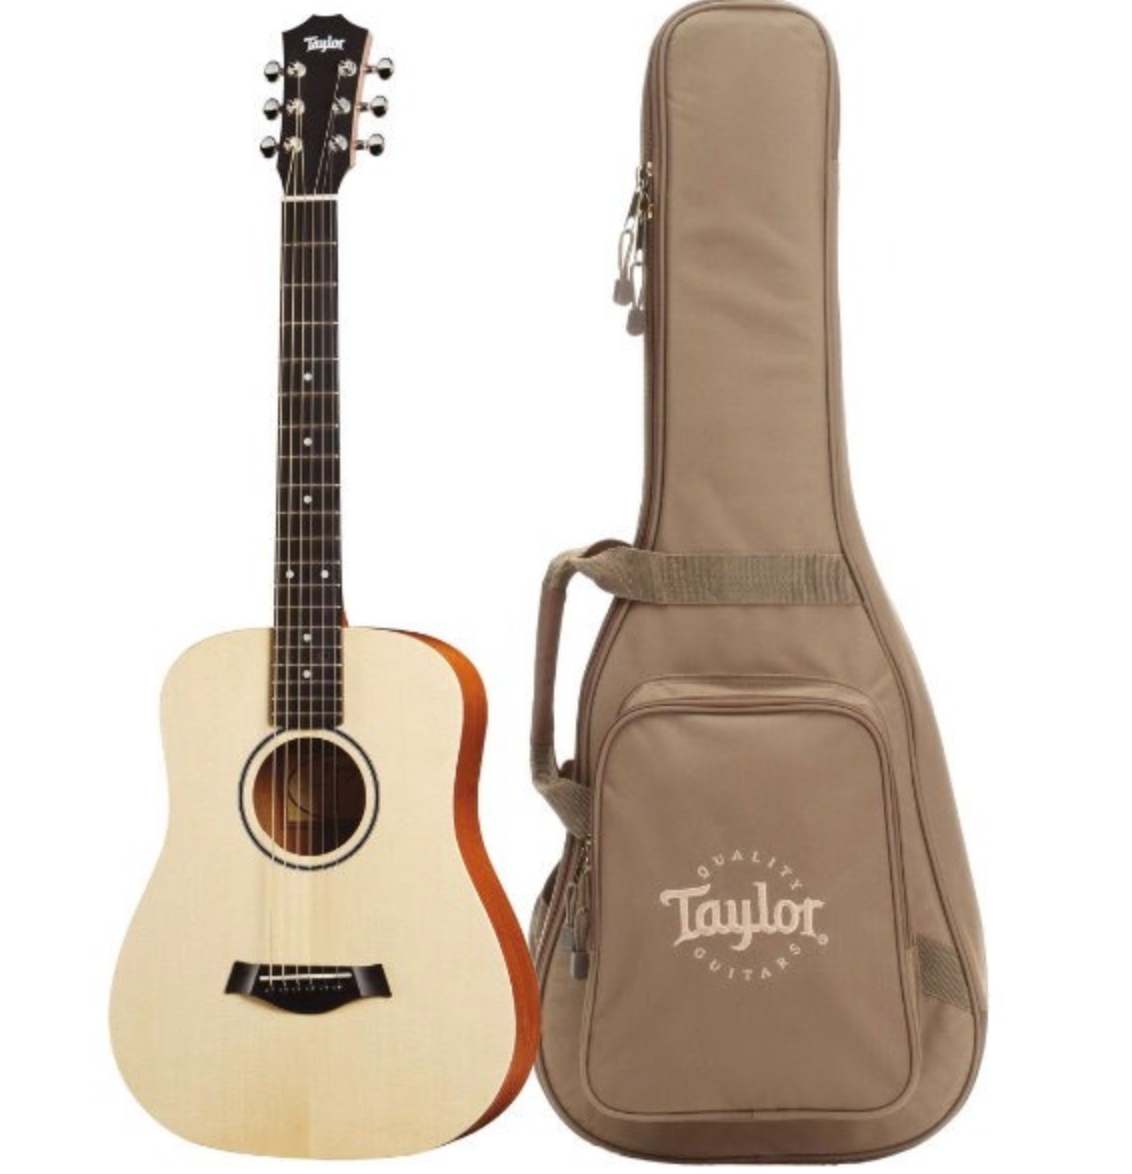 Baby Taylor BT1小吉他 / 旅行吉他 34吋 雲杉木面單板 附Taylor 旅行吉他袋 全新